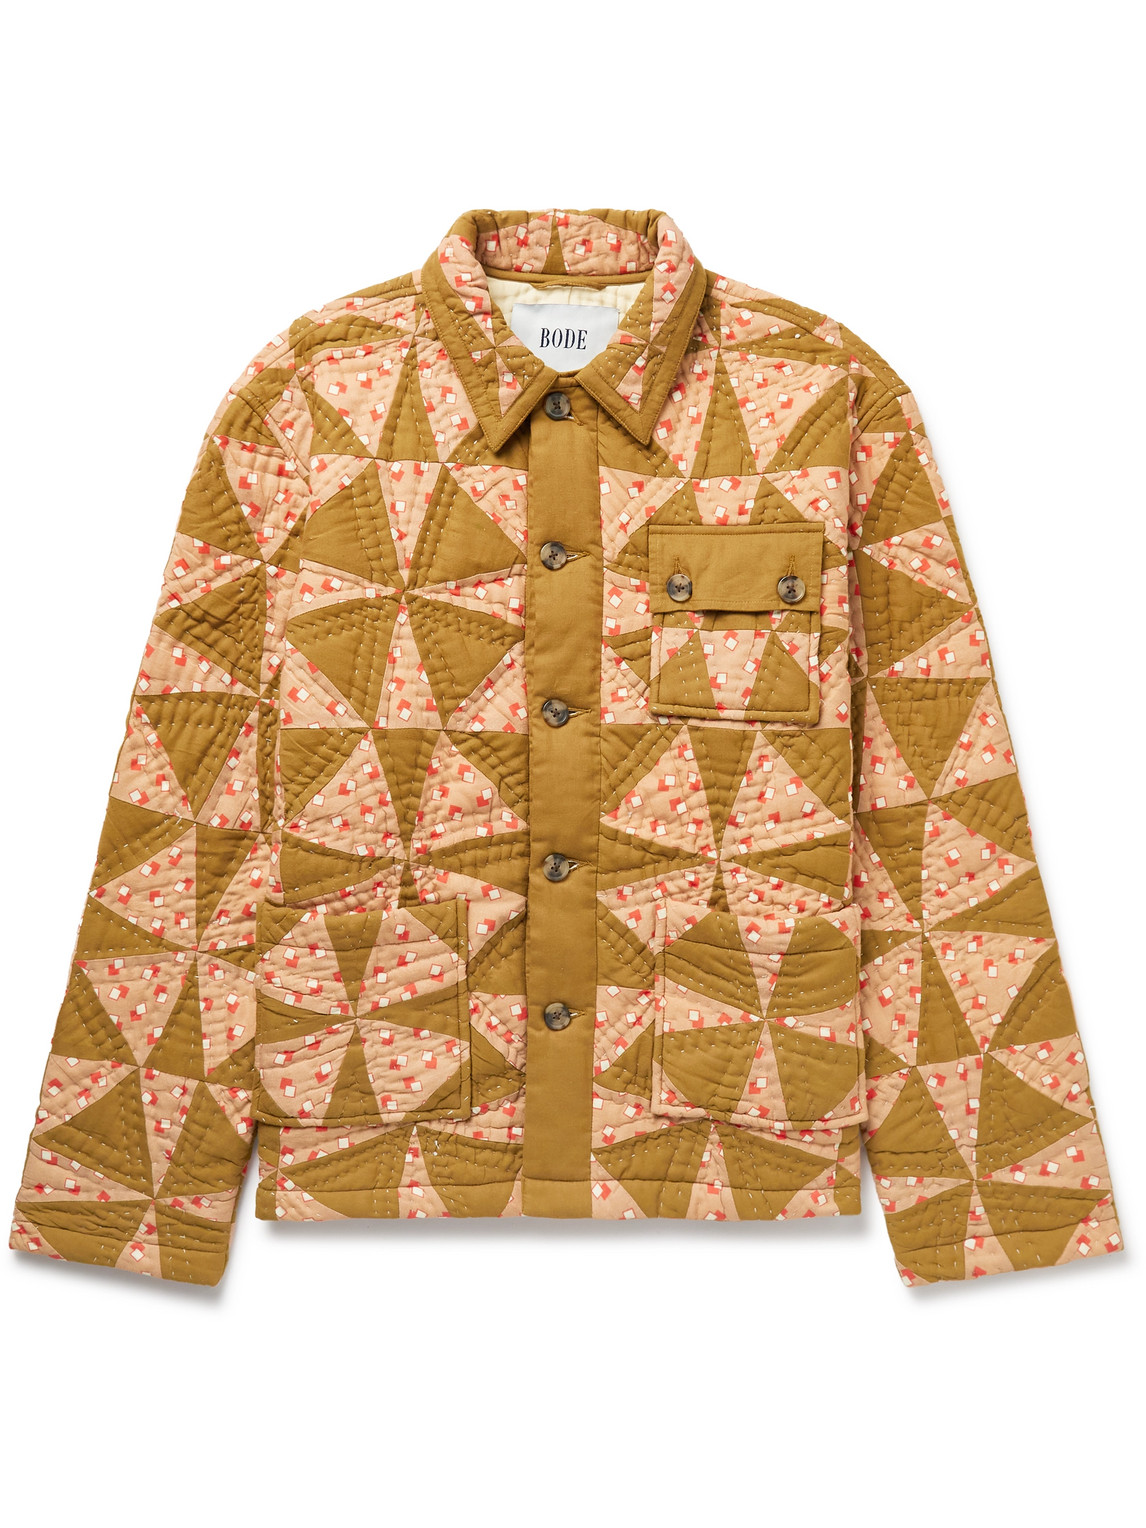 BODE - Kaleidoscope Quilted Padded Printed Cotton Jacket - Men - Brown - L/XL von BODE